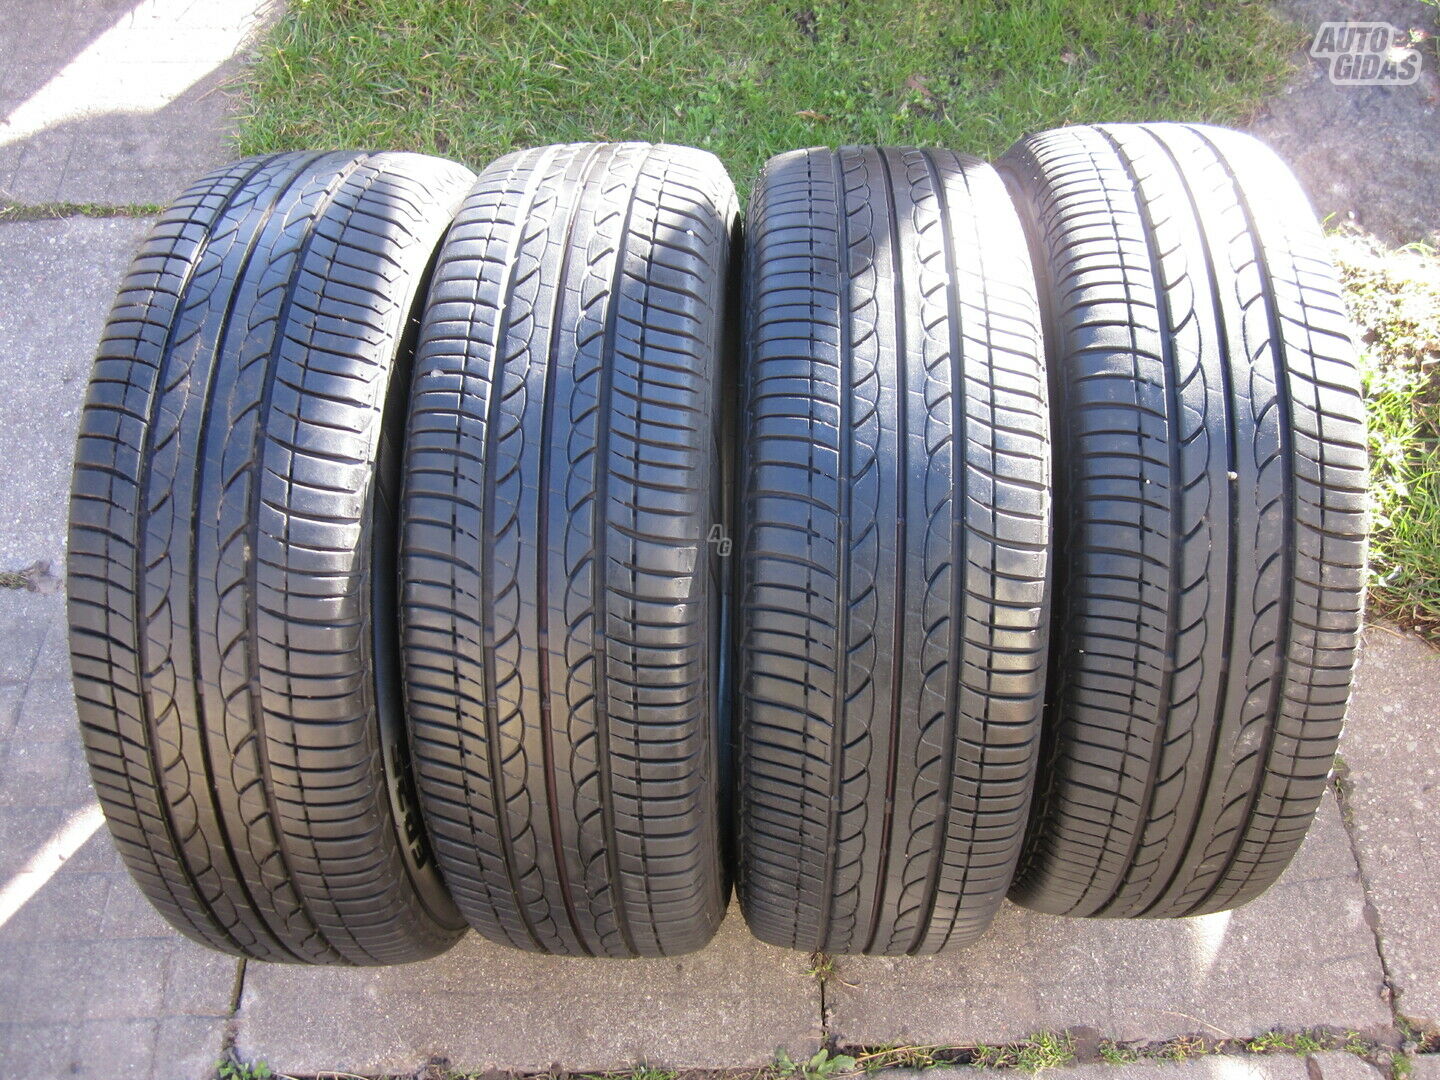 Bridgestone Ecopla R15 summer tyres passanger car